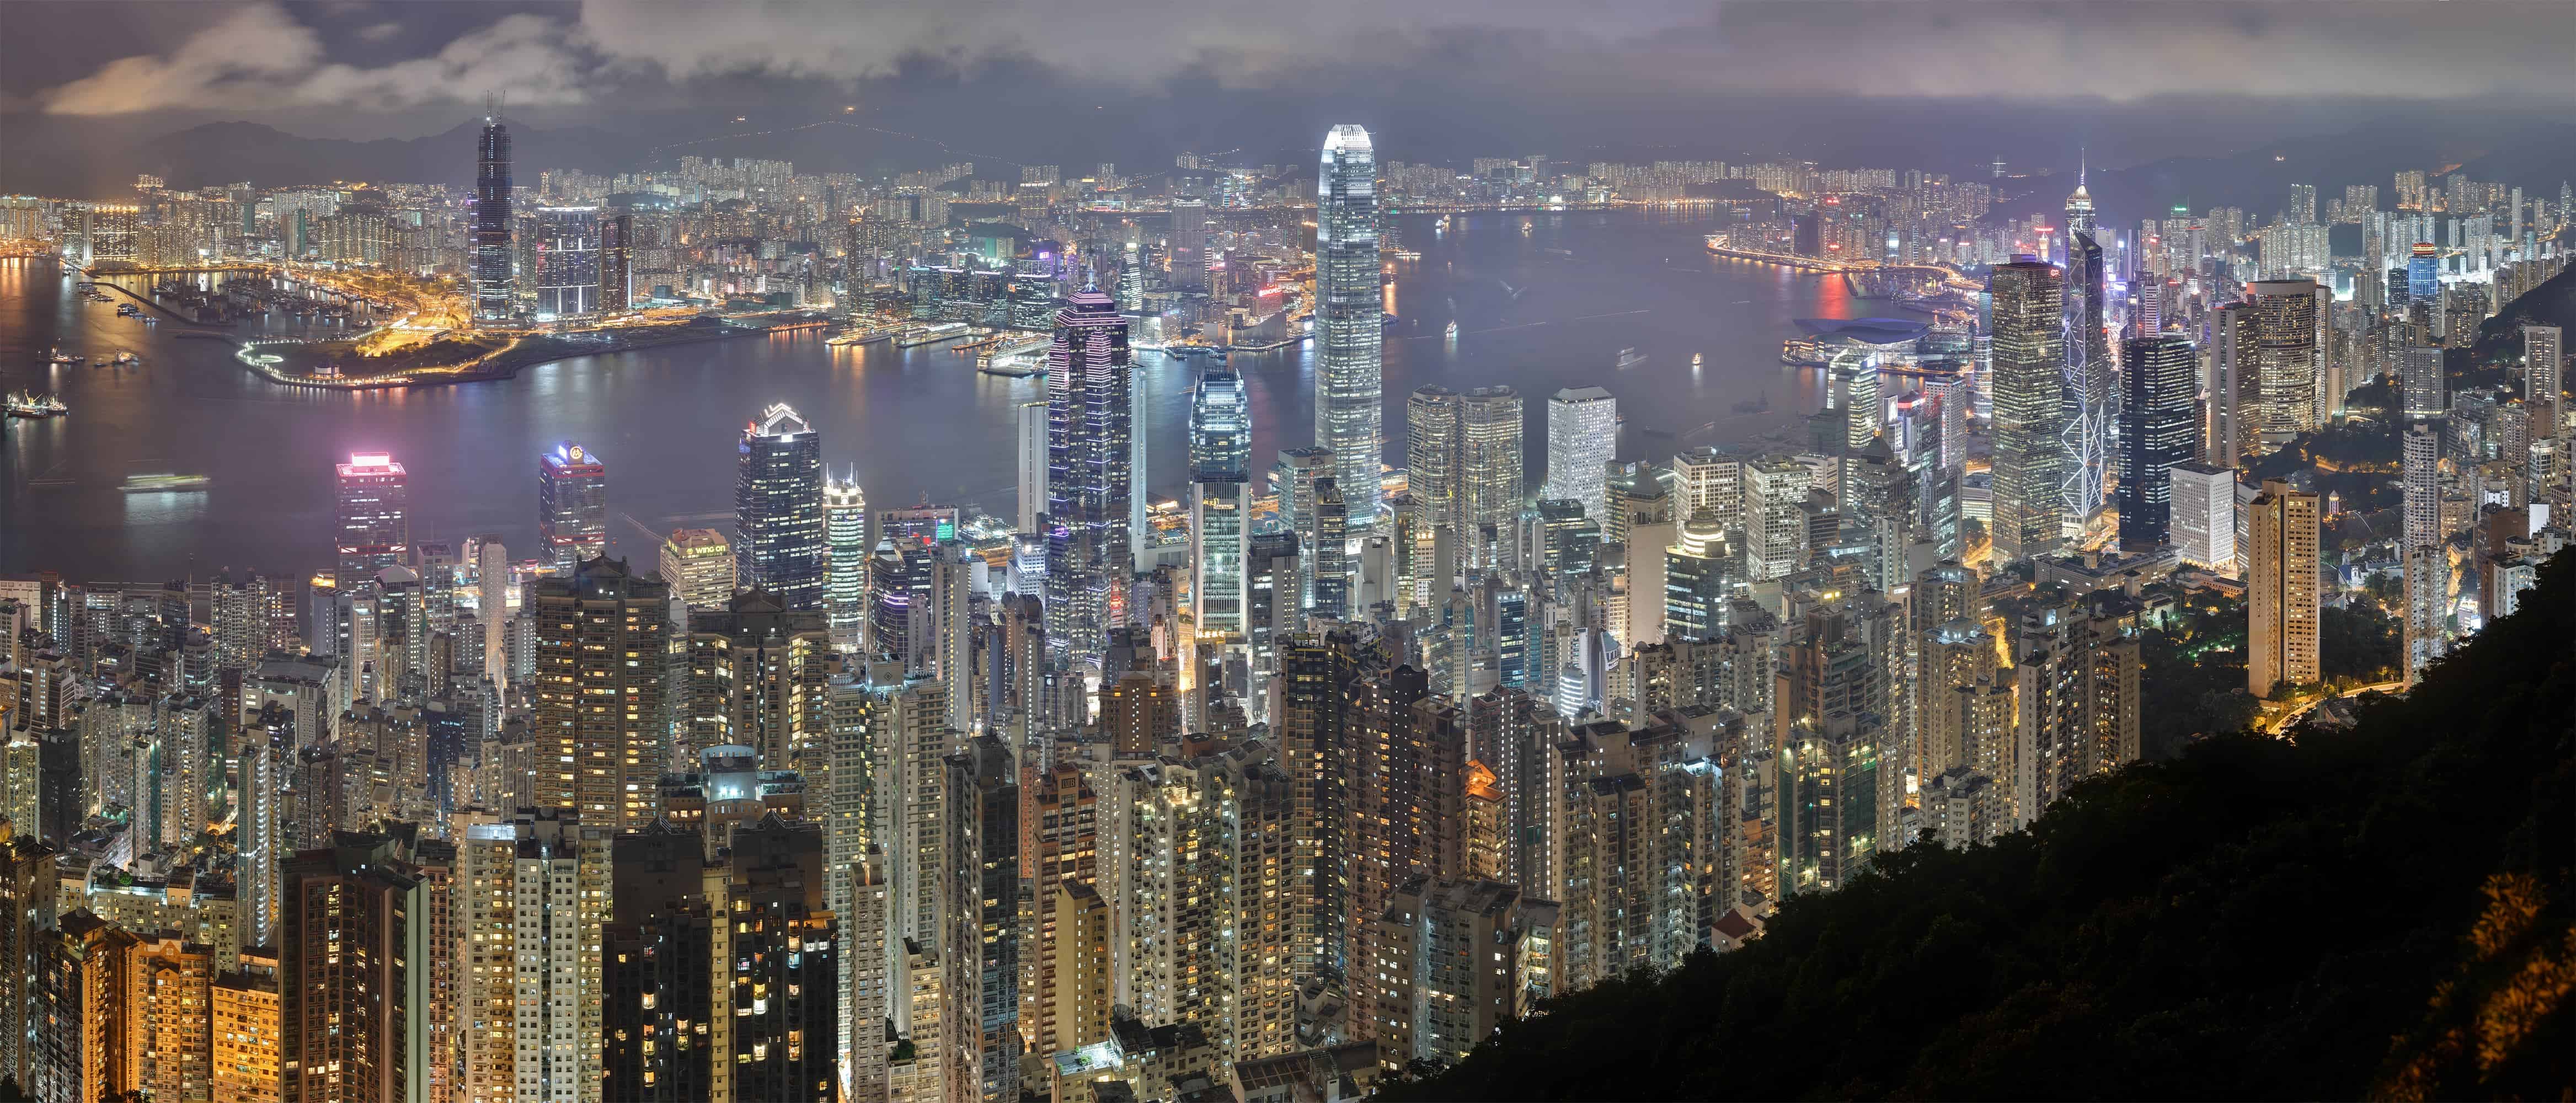 The night skyline in Hong Kong. Image credits: Base64